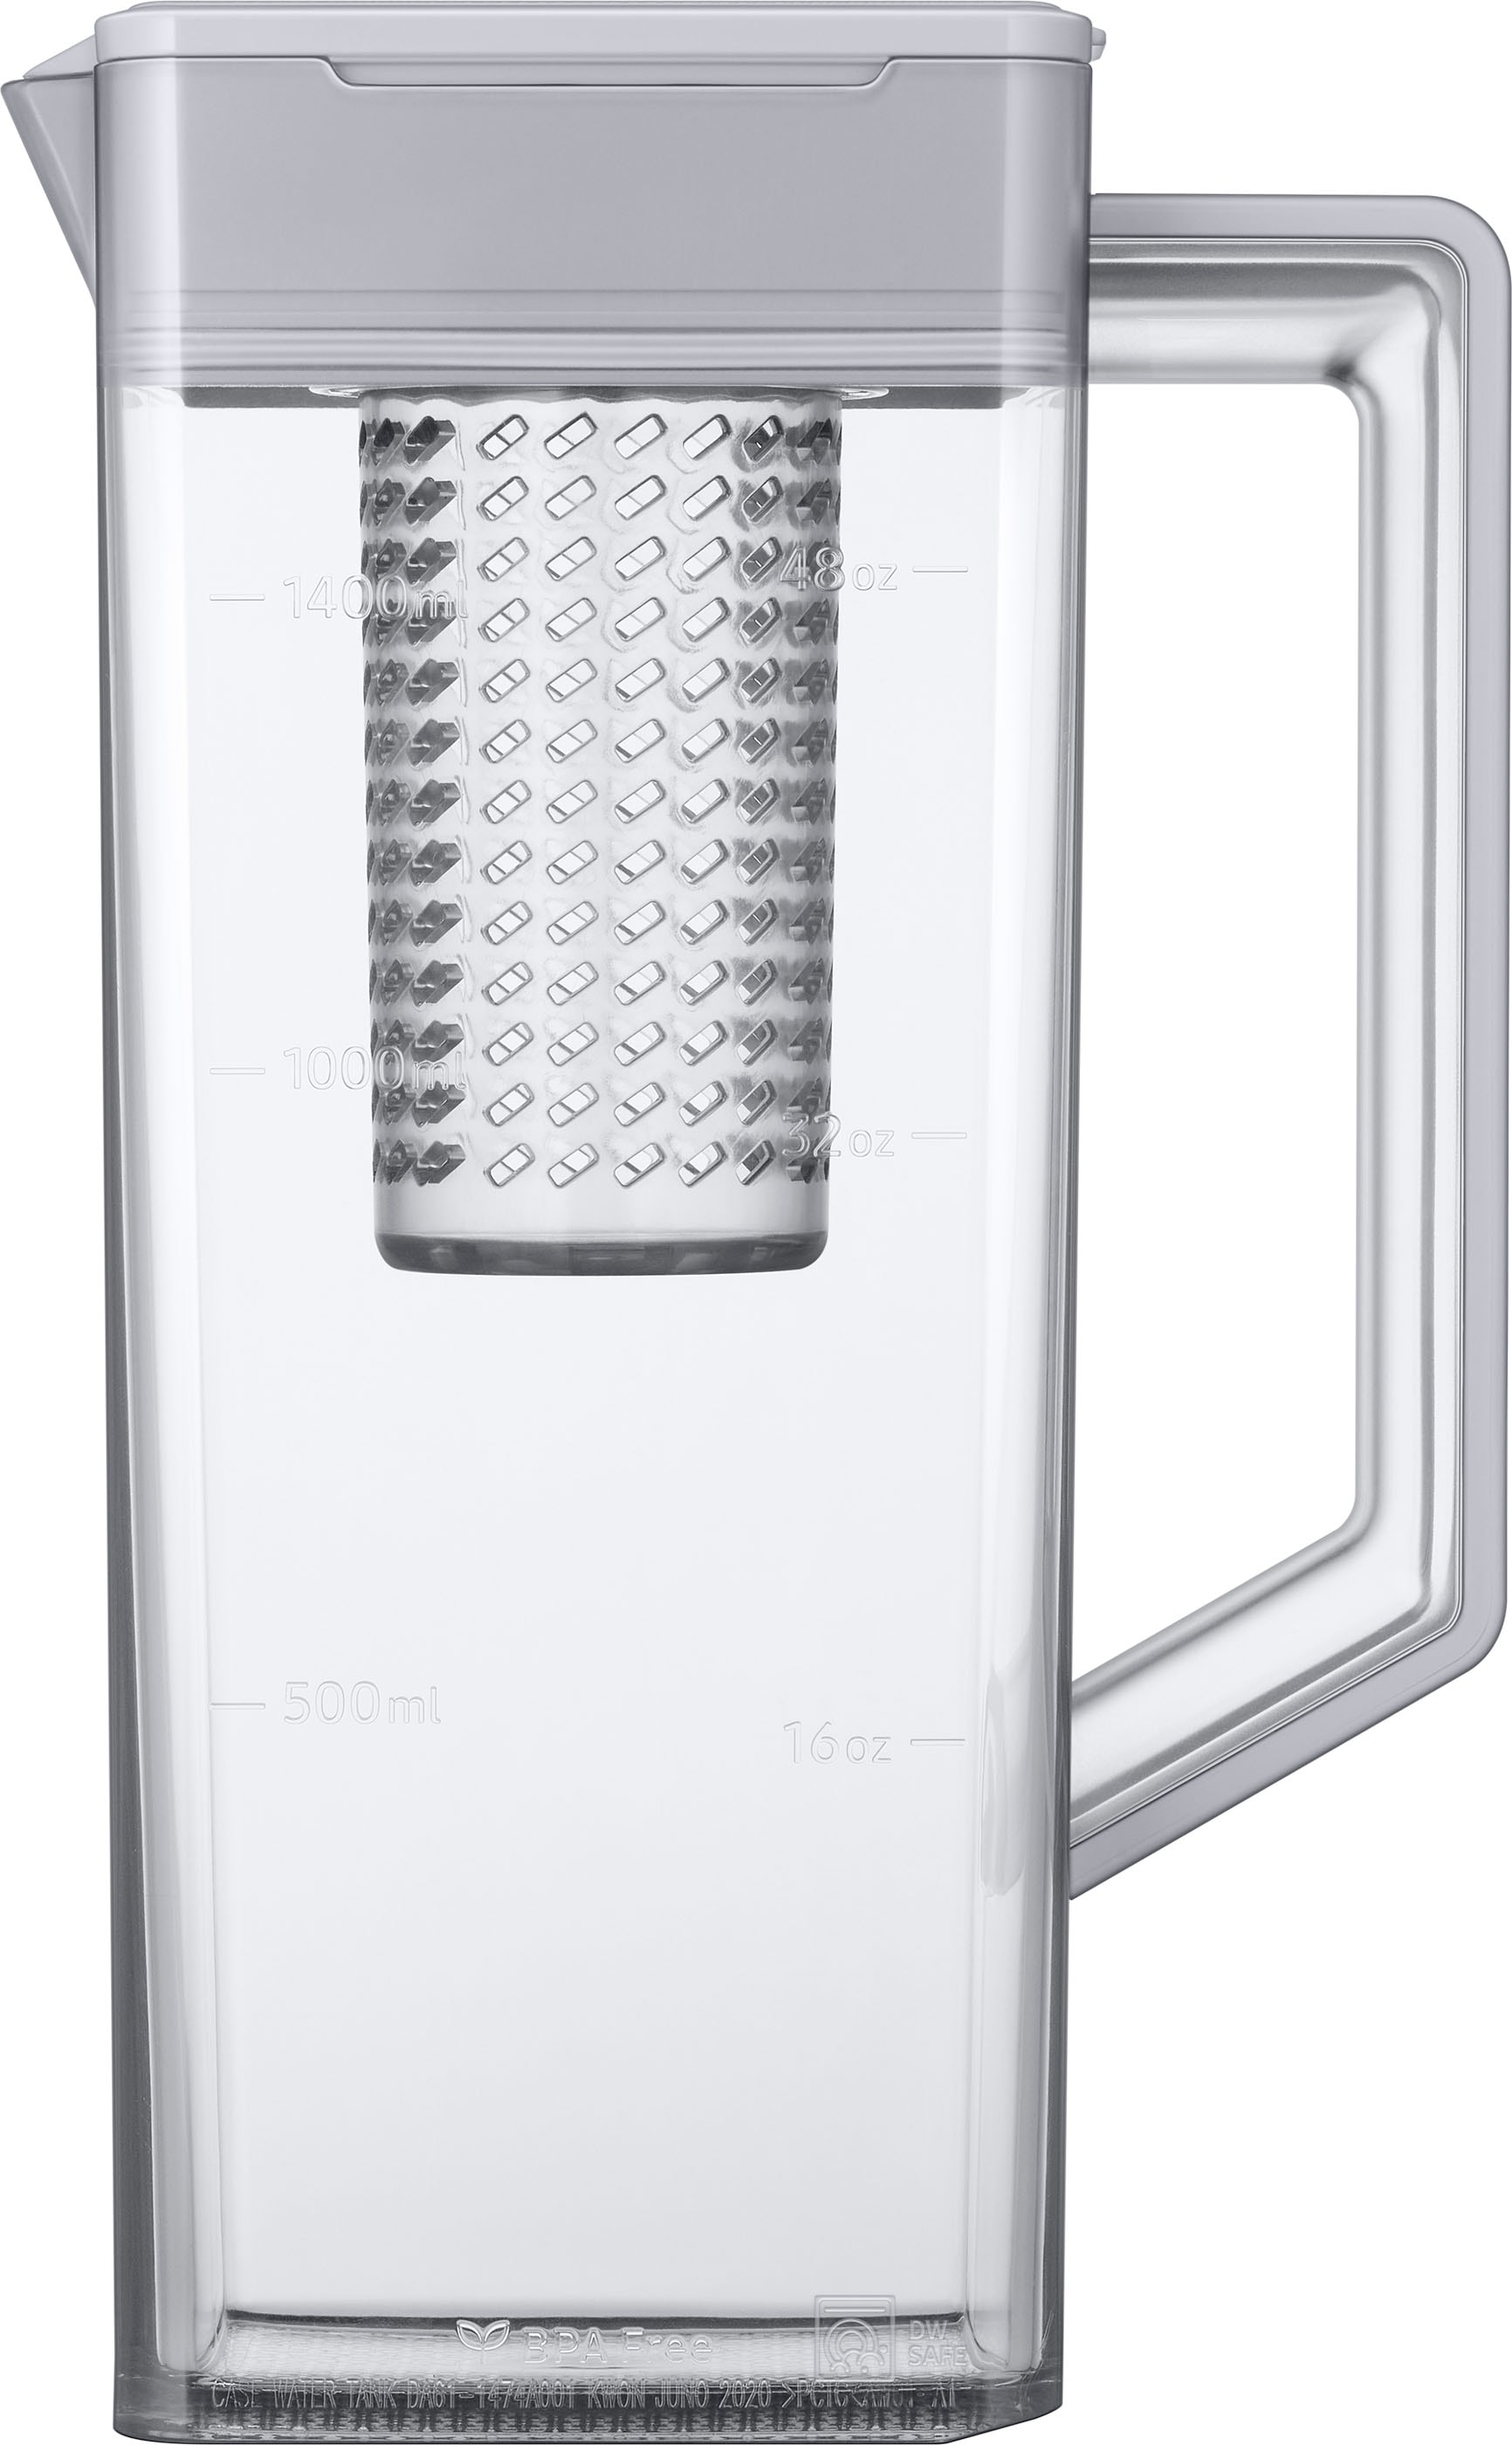 Samsung Multi Door, RF65A967FS9, 182,5 cm hoch, 91,2 cm breit | BAUR